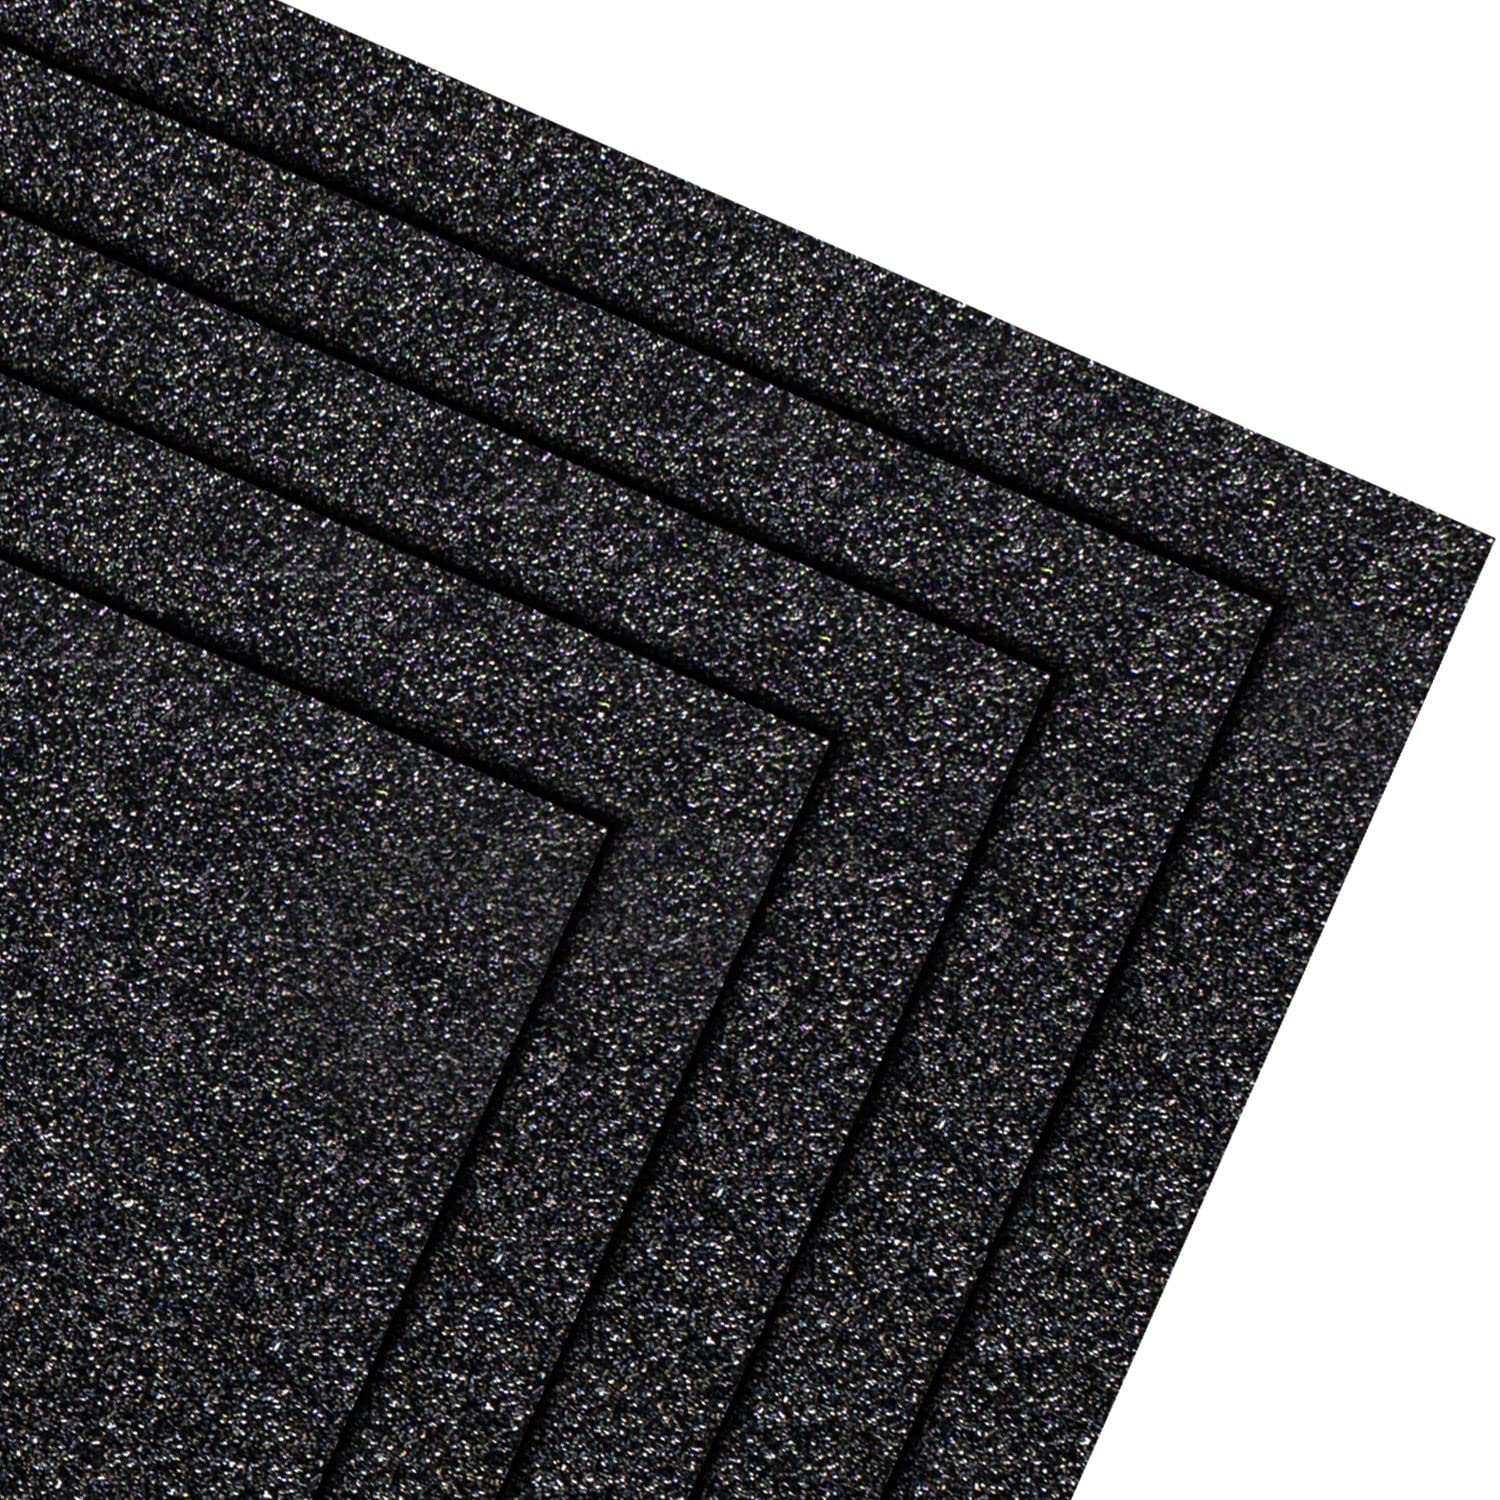 Sandpaper for Metal Sanding and Automotive Polishing, Dry or Wet Sanding